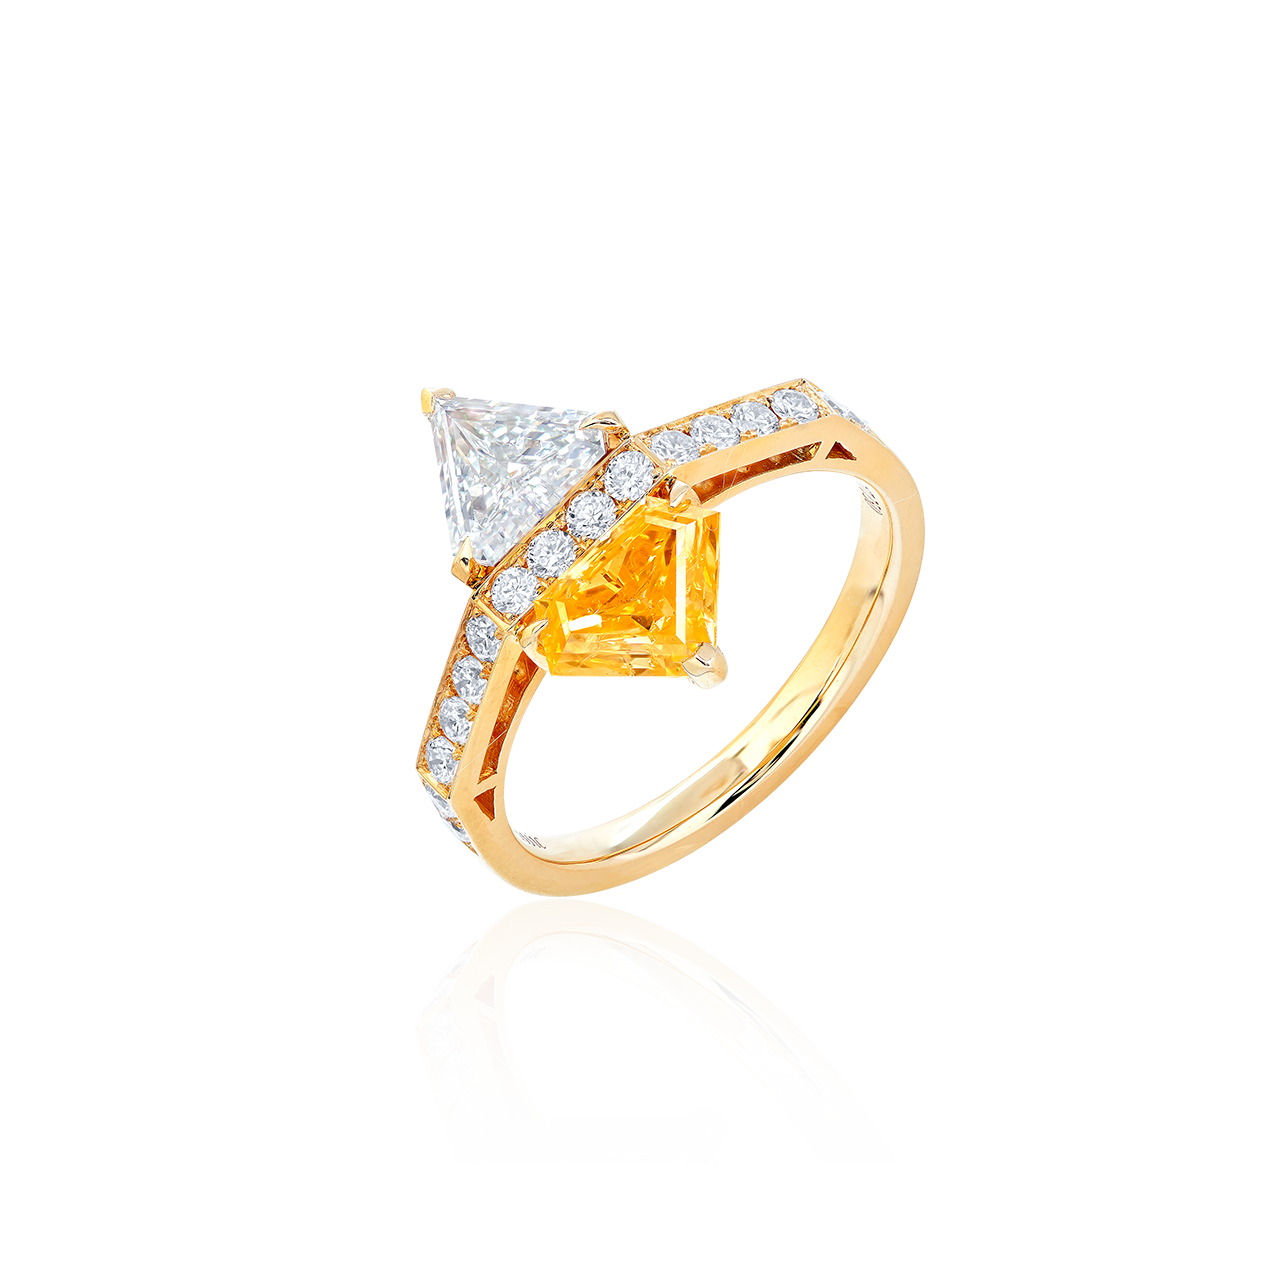 GIA 0.97克拉 濃彩橘黃彩鑽鑽石戒
FANCY INTENSE ORANGE-YELLOW 
COLOURED DIAMOND AND DIAMOND RING